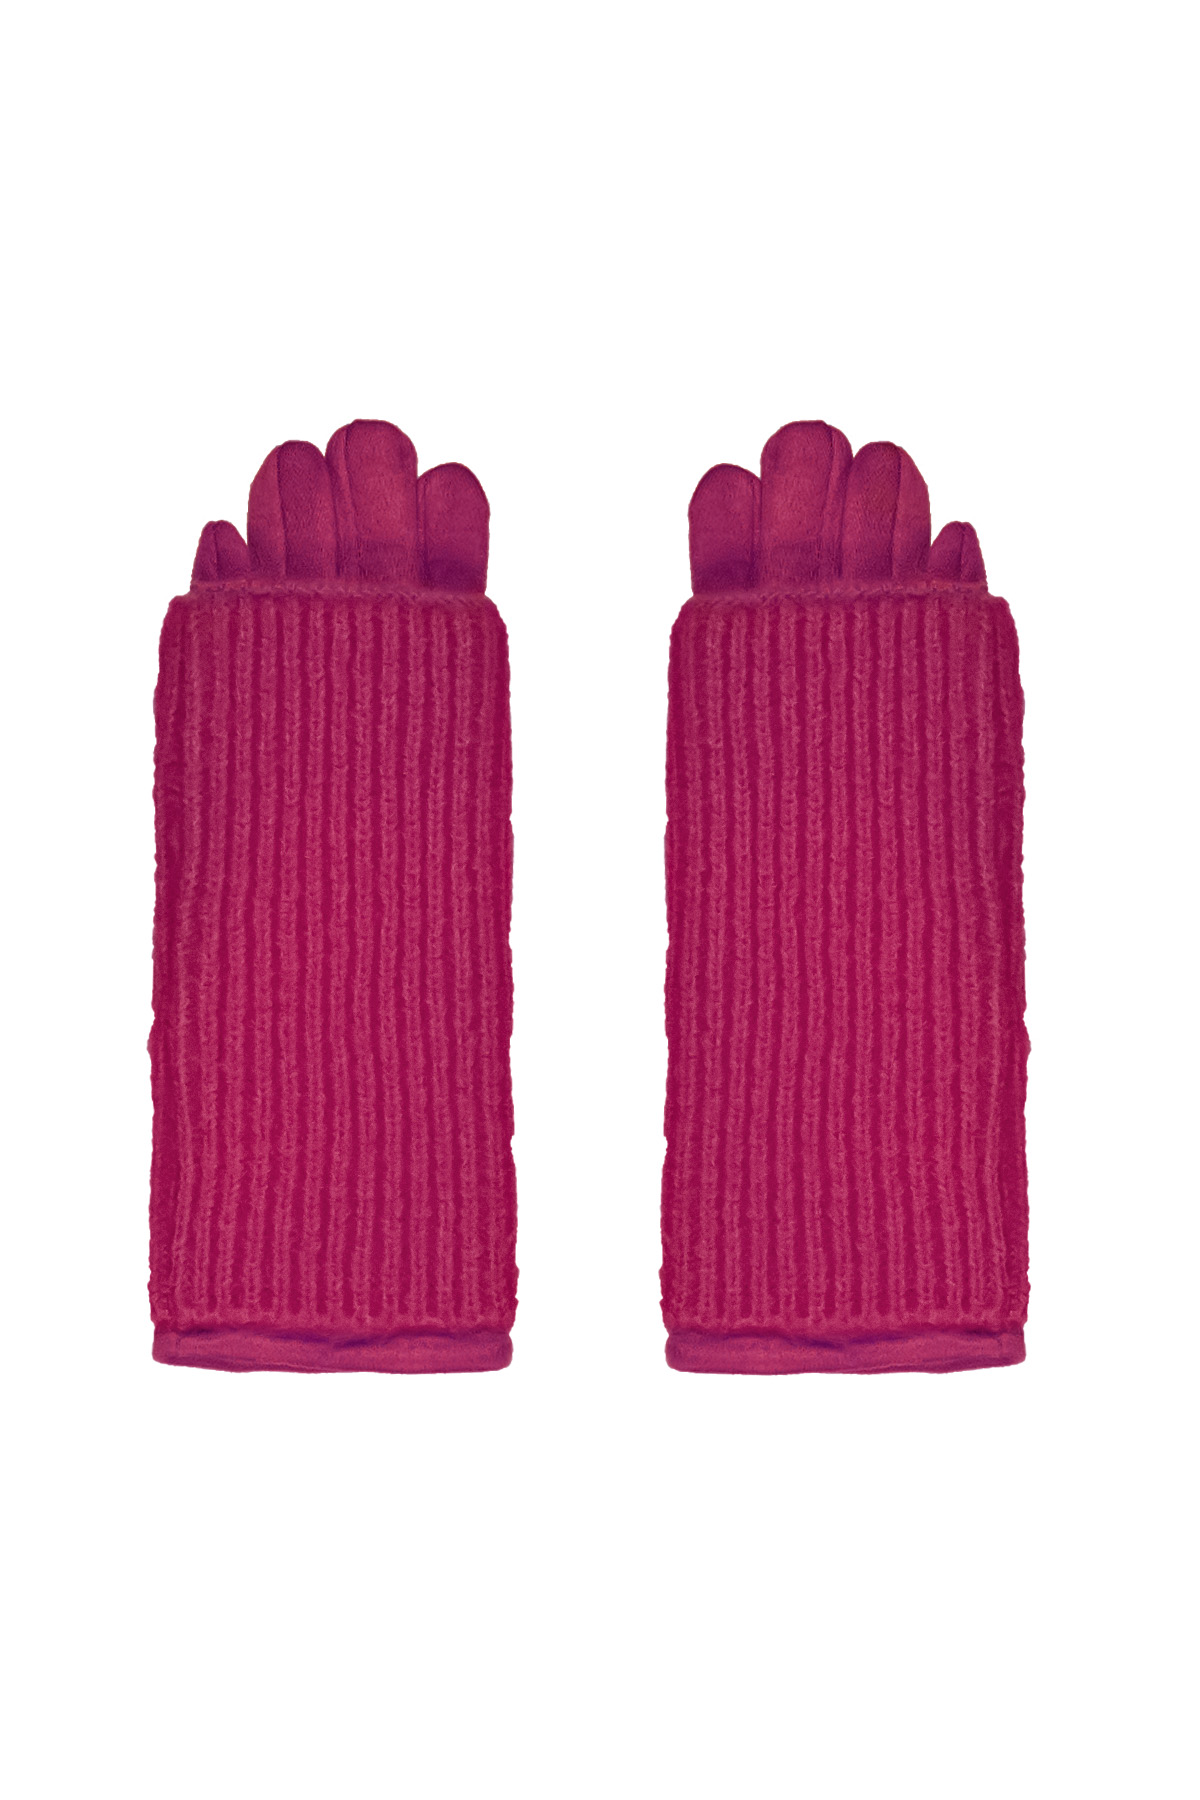 Handschuhe doppelschichtig - fuchsia h5 